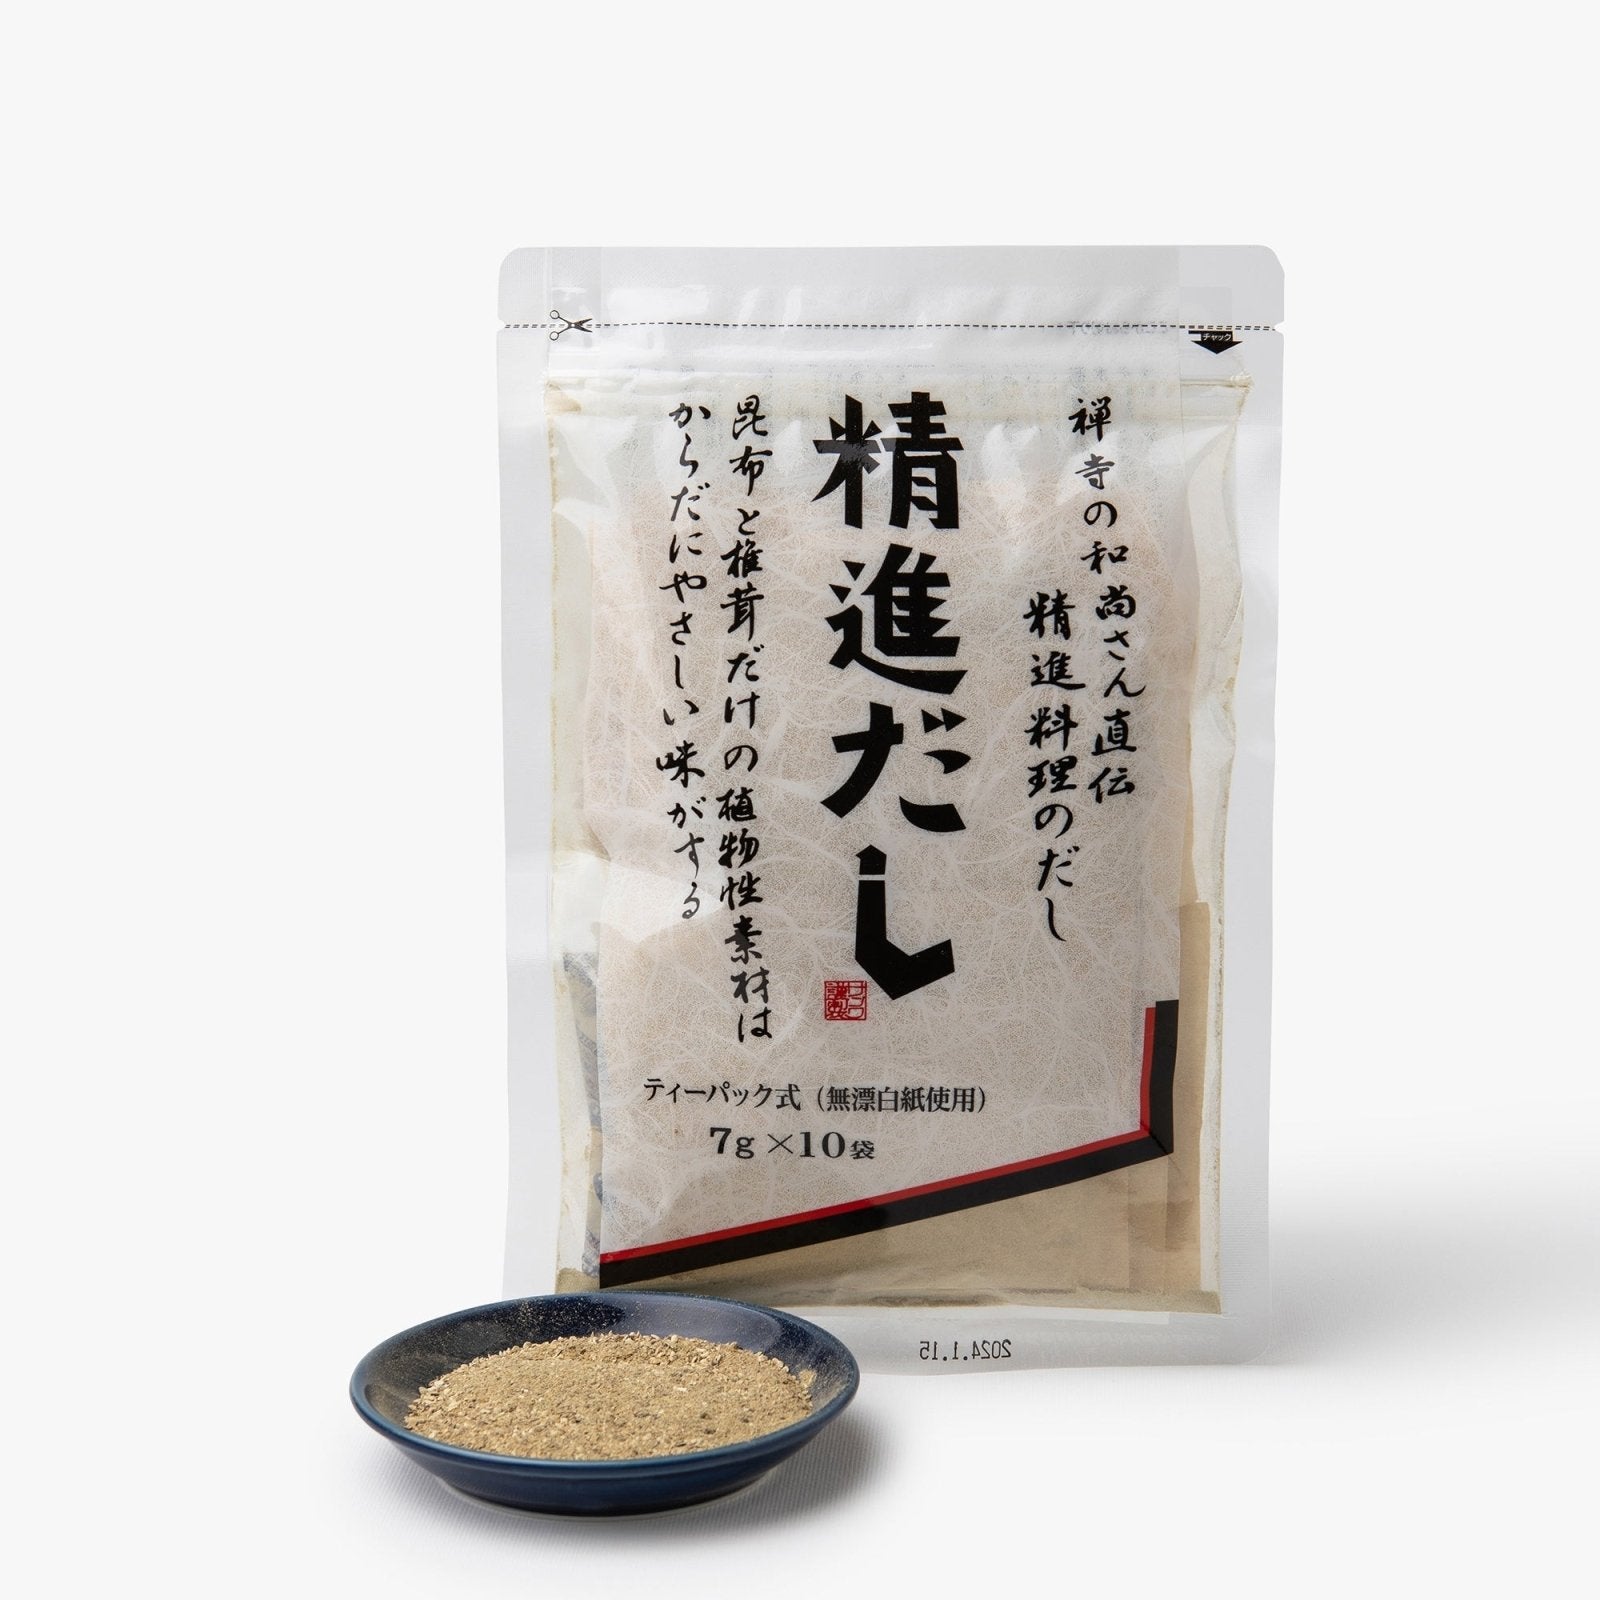 Dashi and Ingredients for Japanese Broth - iRASSHAi